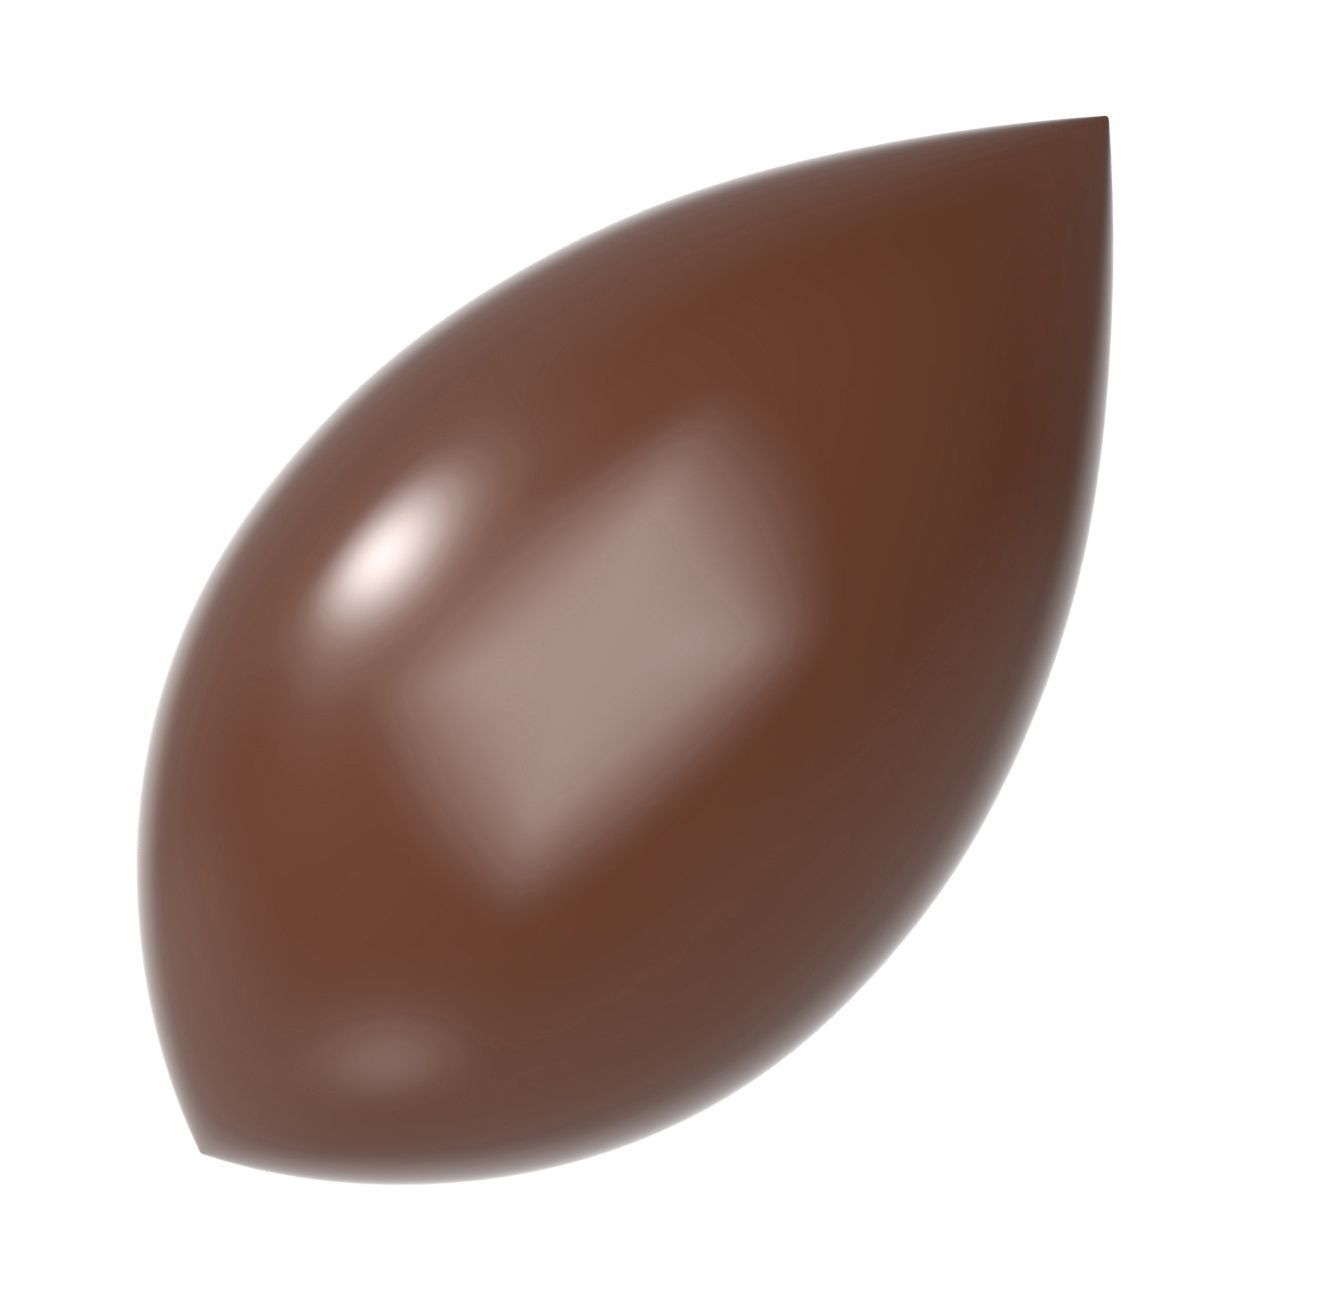 Se Professionel chokoladeform i polycarbonat - Quenelle - Frank Haasnoot CW1673 hos BageTid.dk